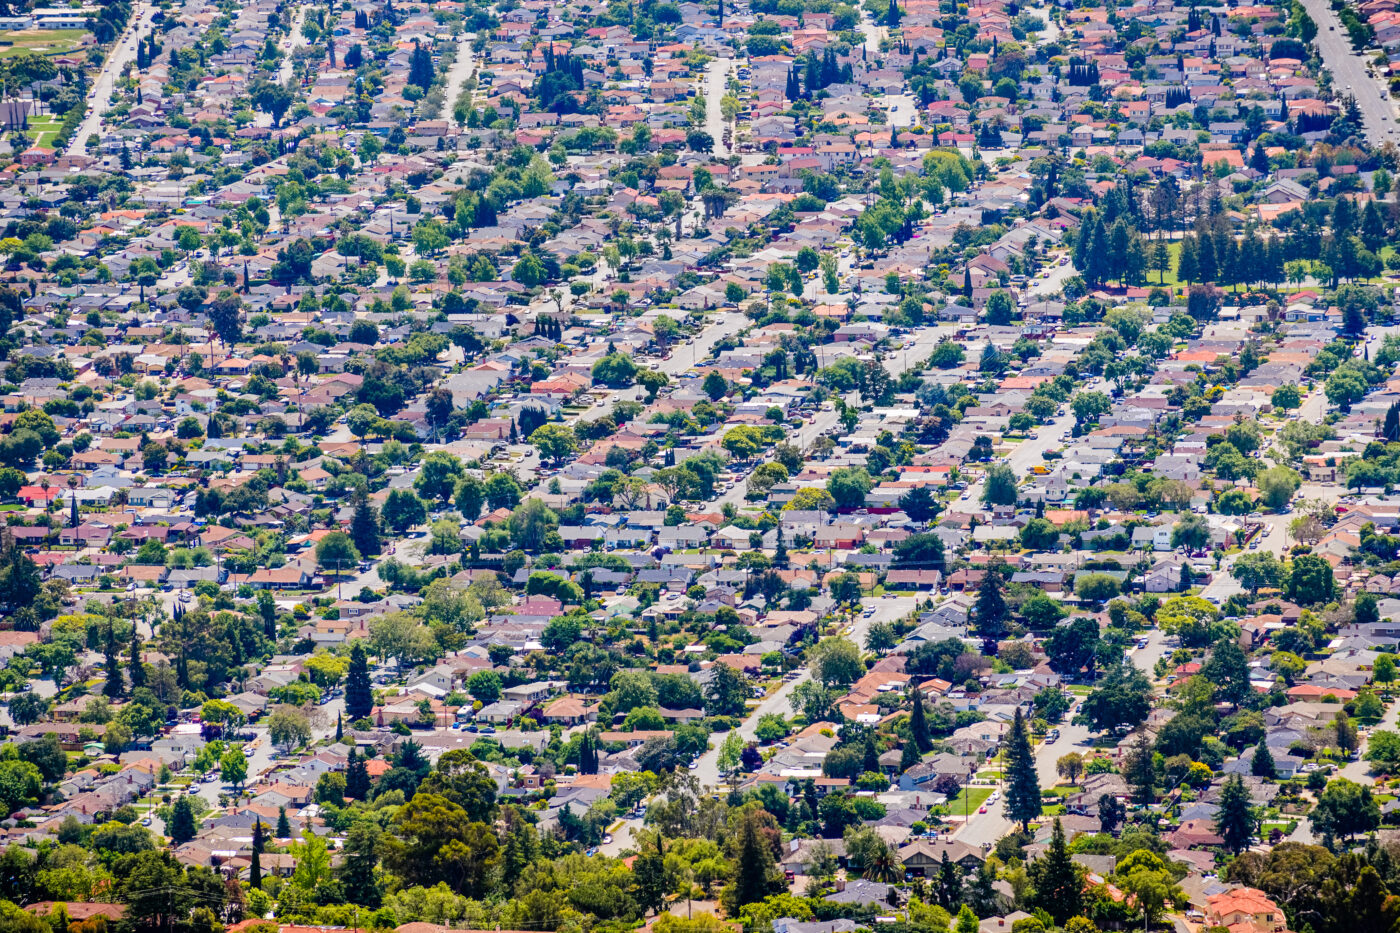 Aerial view of residential neighborhood in San Jose, south San Francisco bay area, California